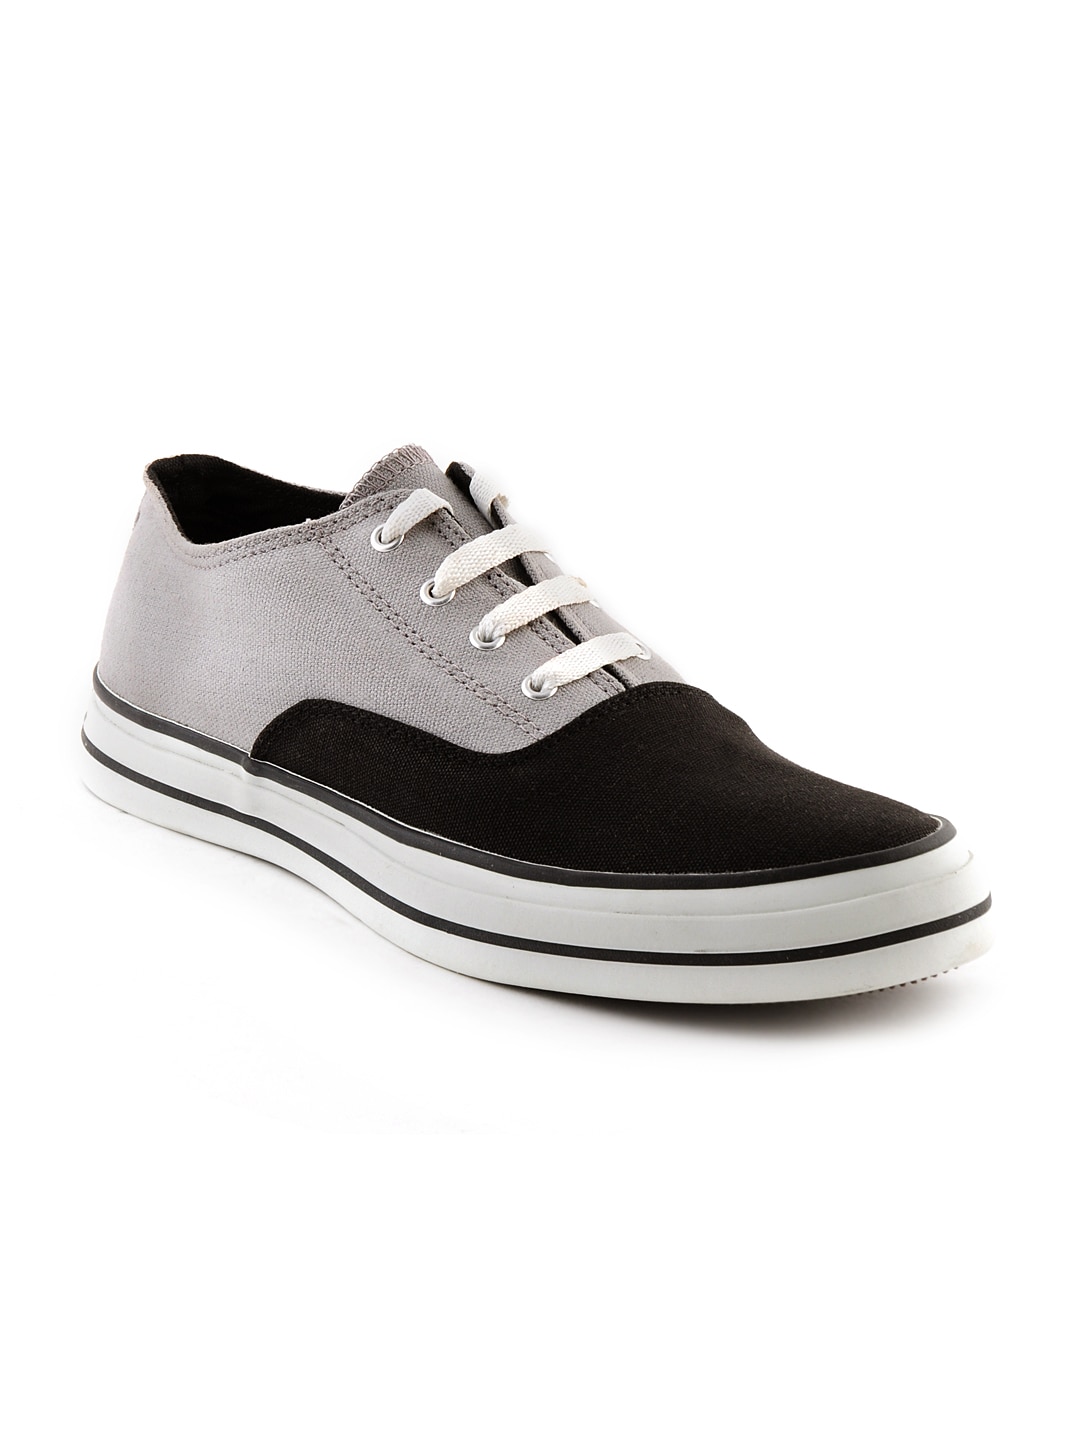 Converse Unisex Contrast Oxford Black Casual Shoes